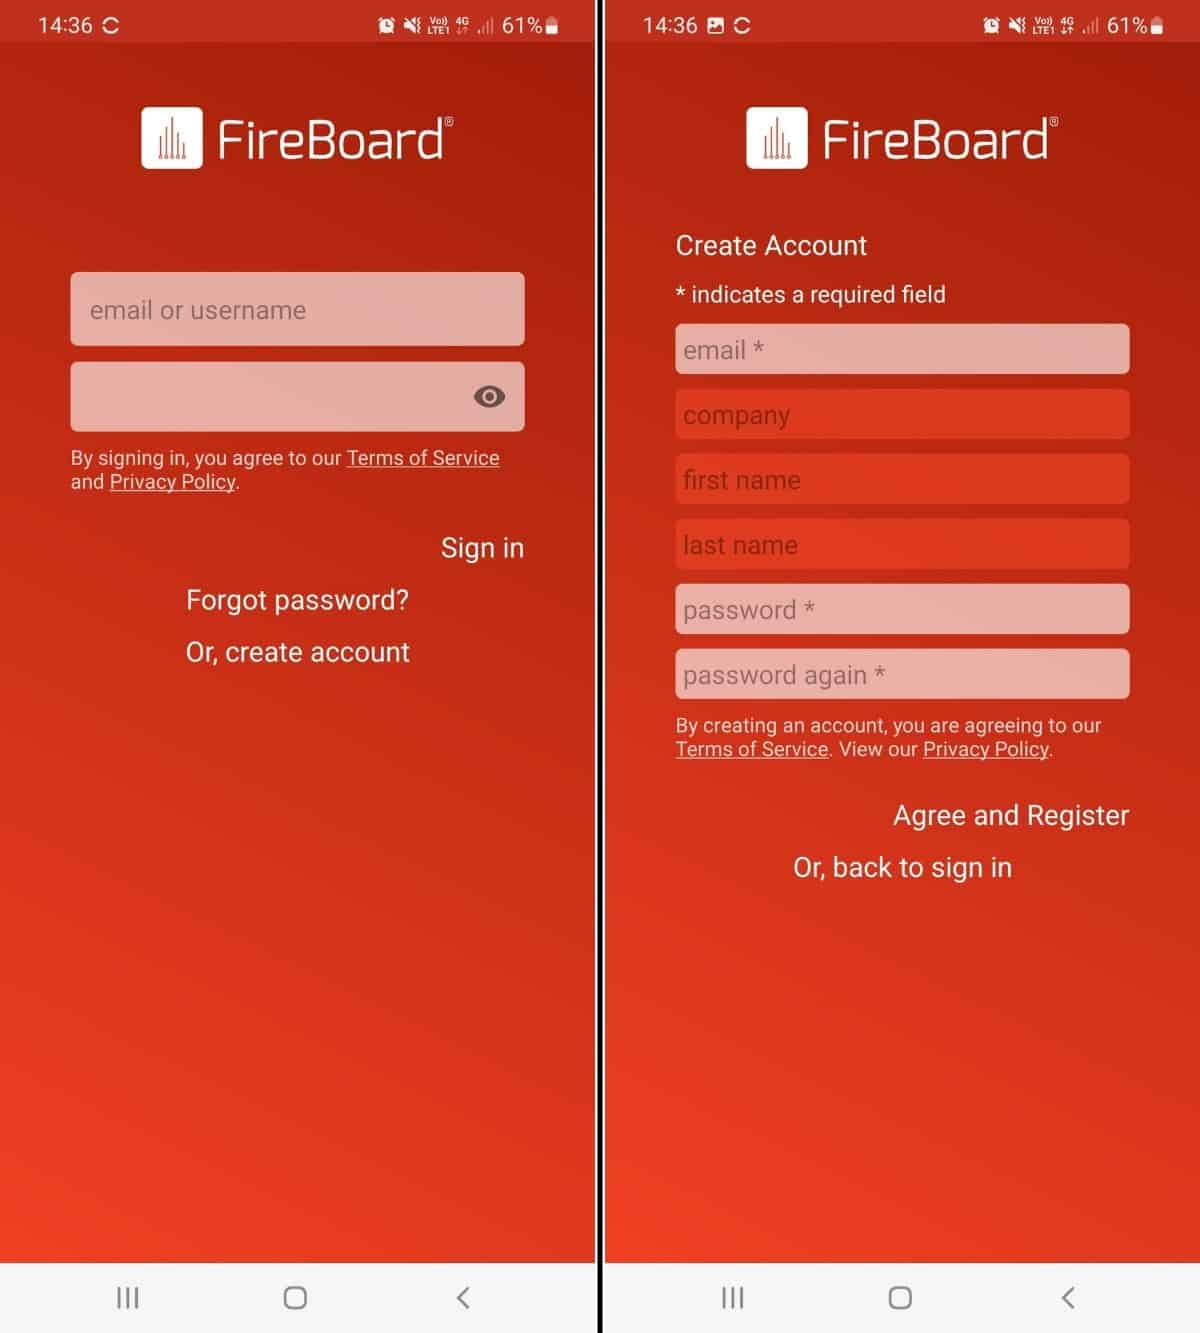 FireBoard app screenshots showing account creation.